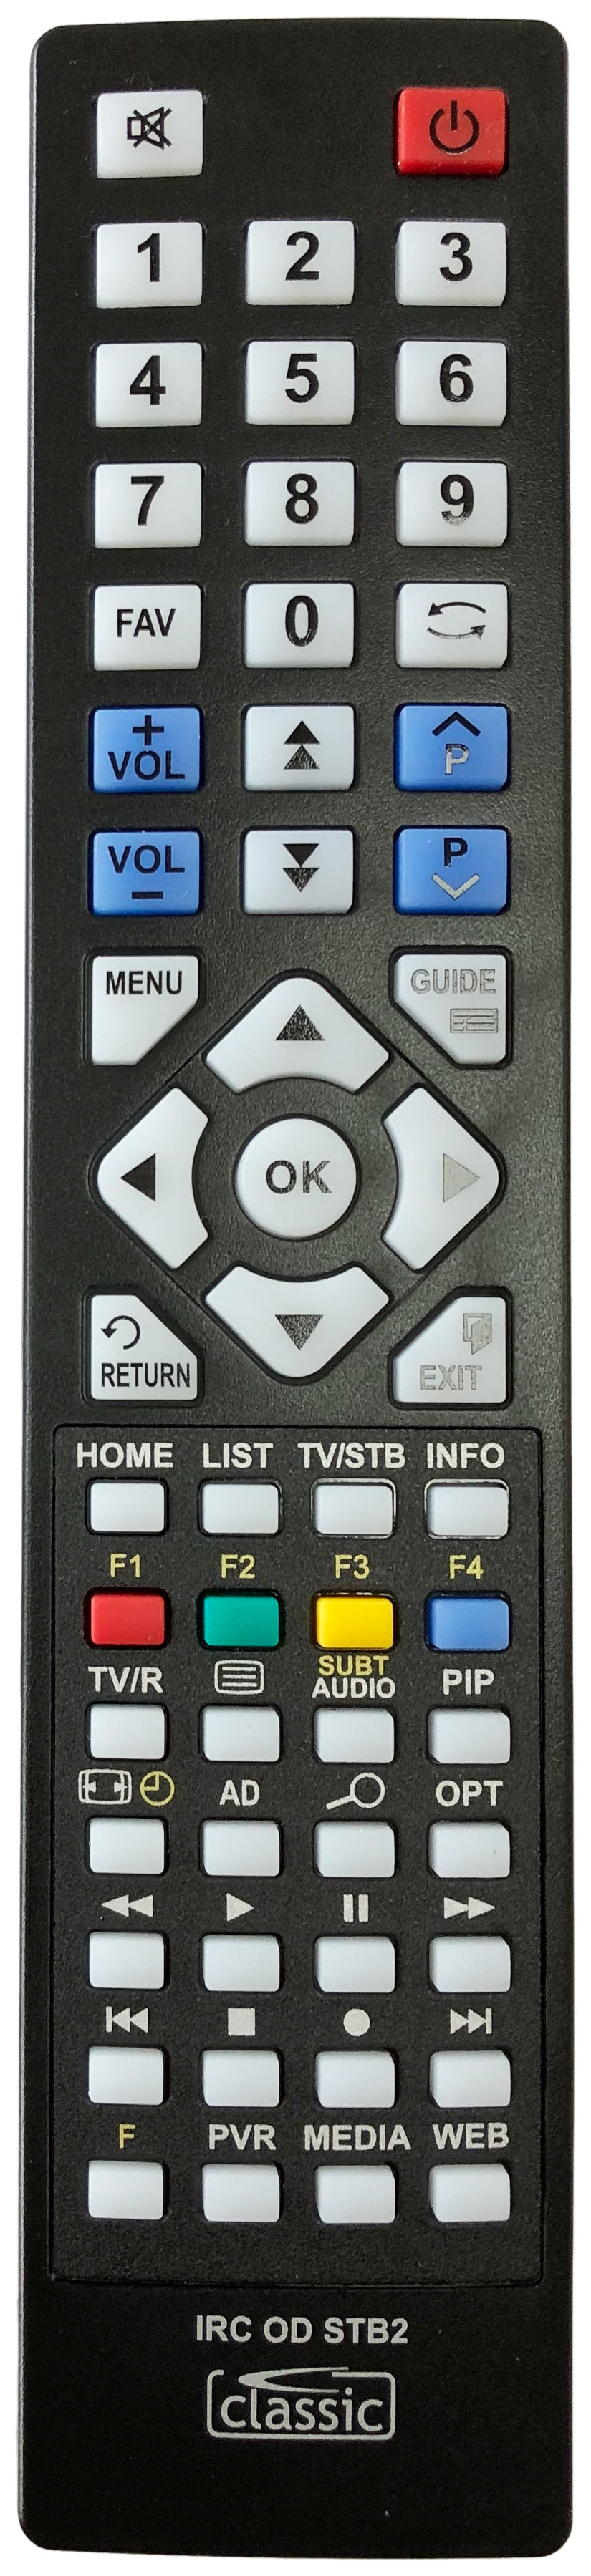 HUMAX HDR1010 Remote Control